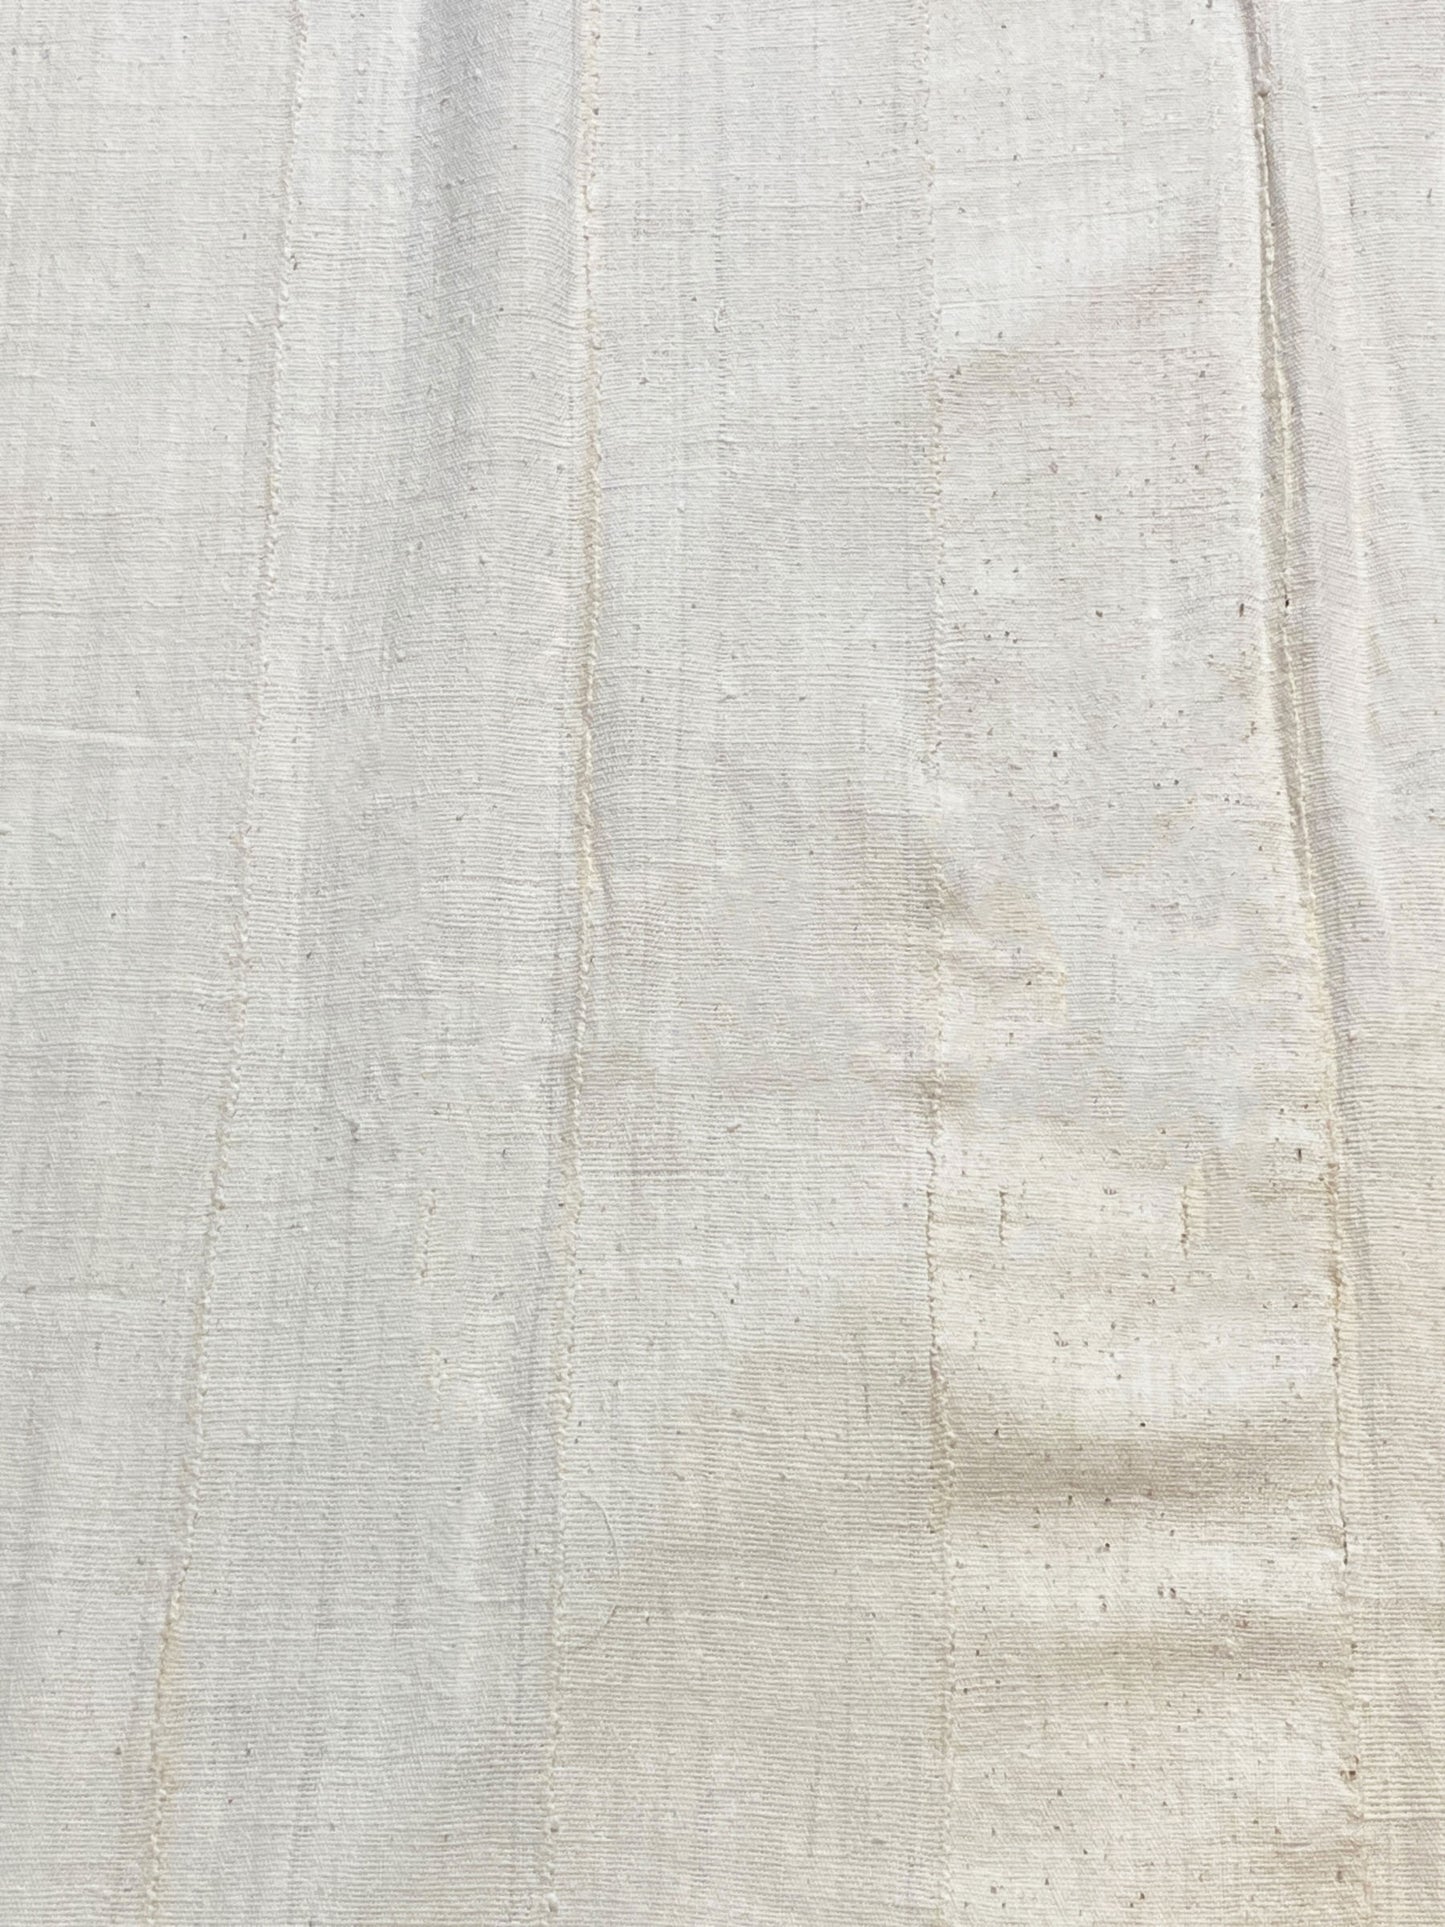 #7070 African Plain White Mud Cloth /Bogolan Textile Mali 41" by 69"